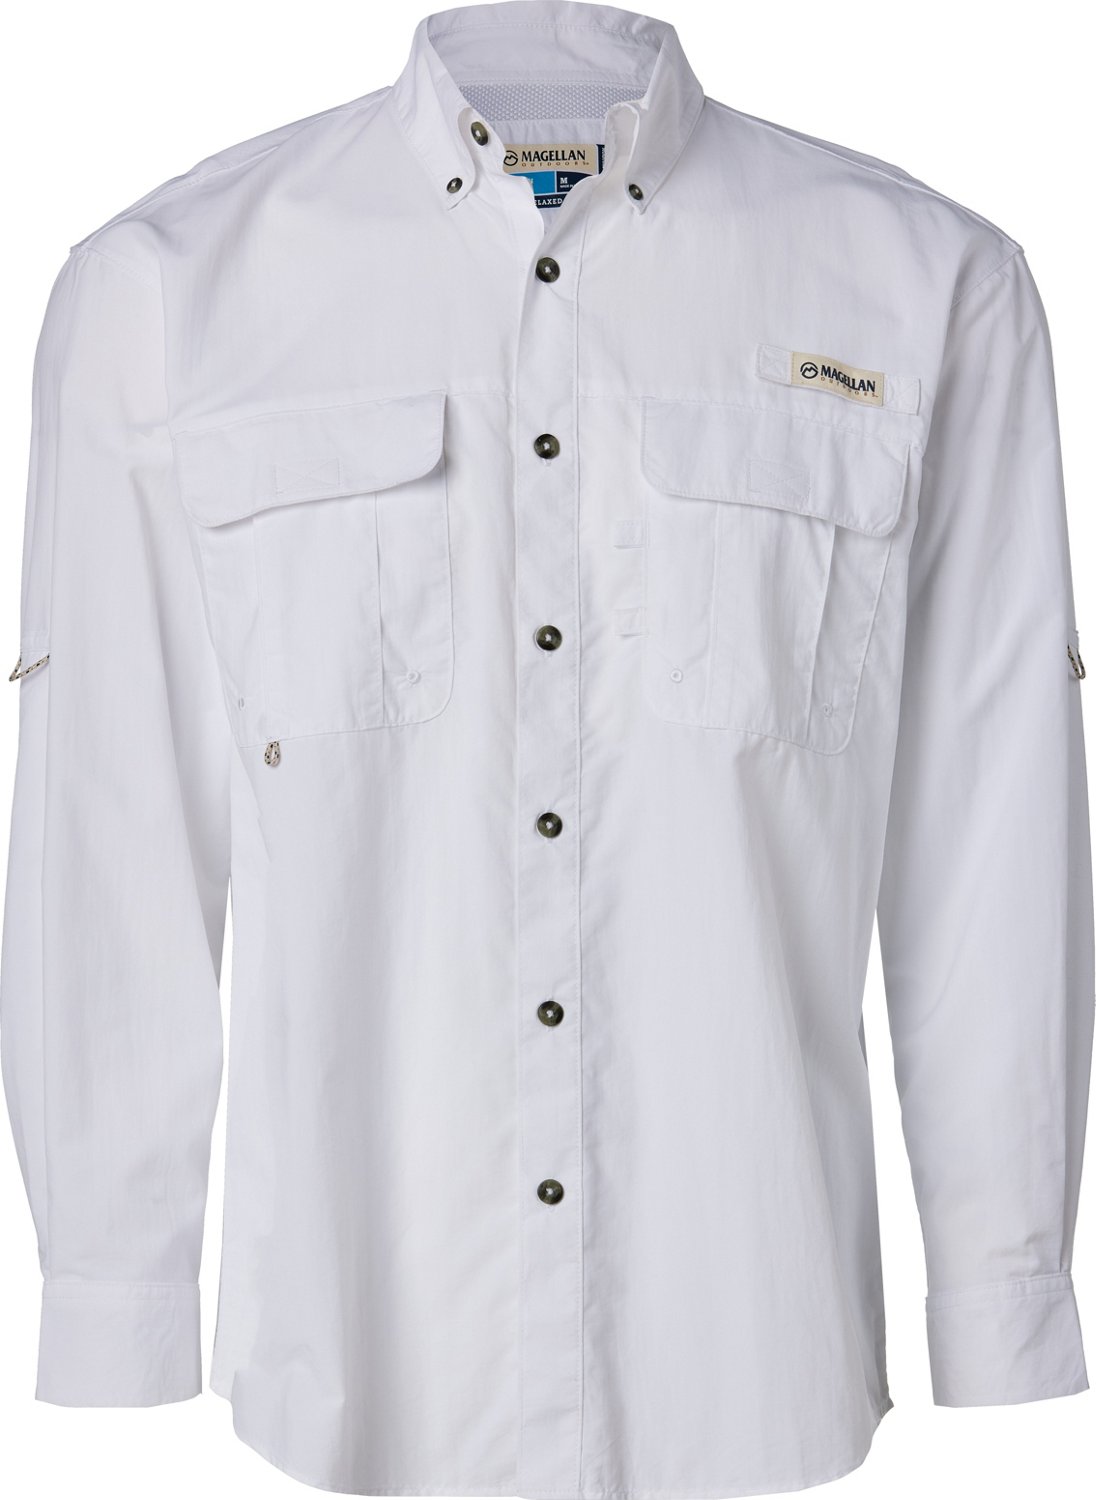 Magellan fishing shirt Long Sleeve Mens XL